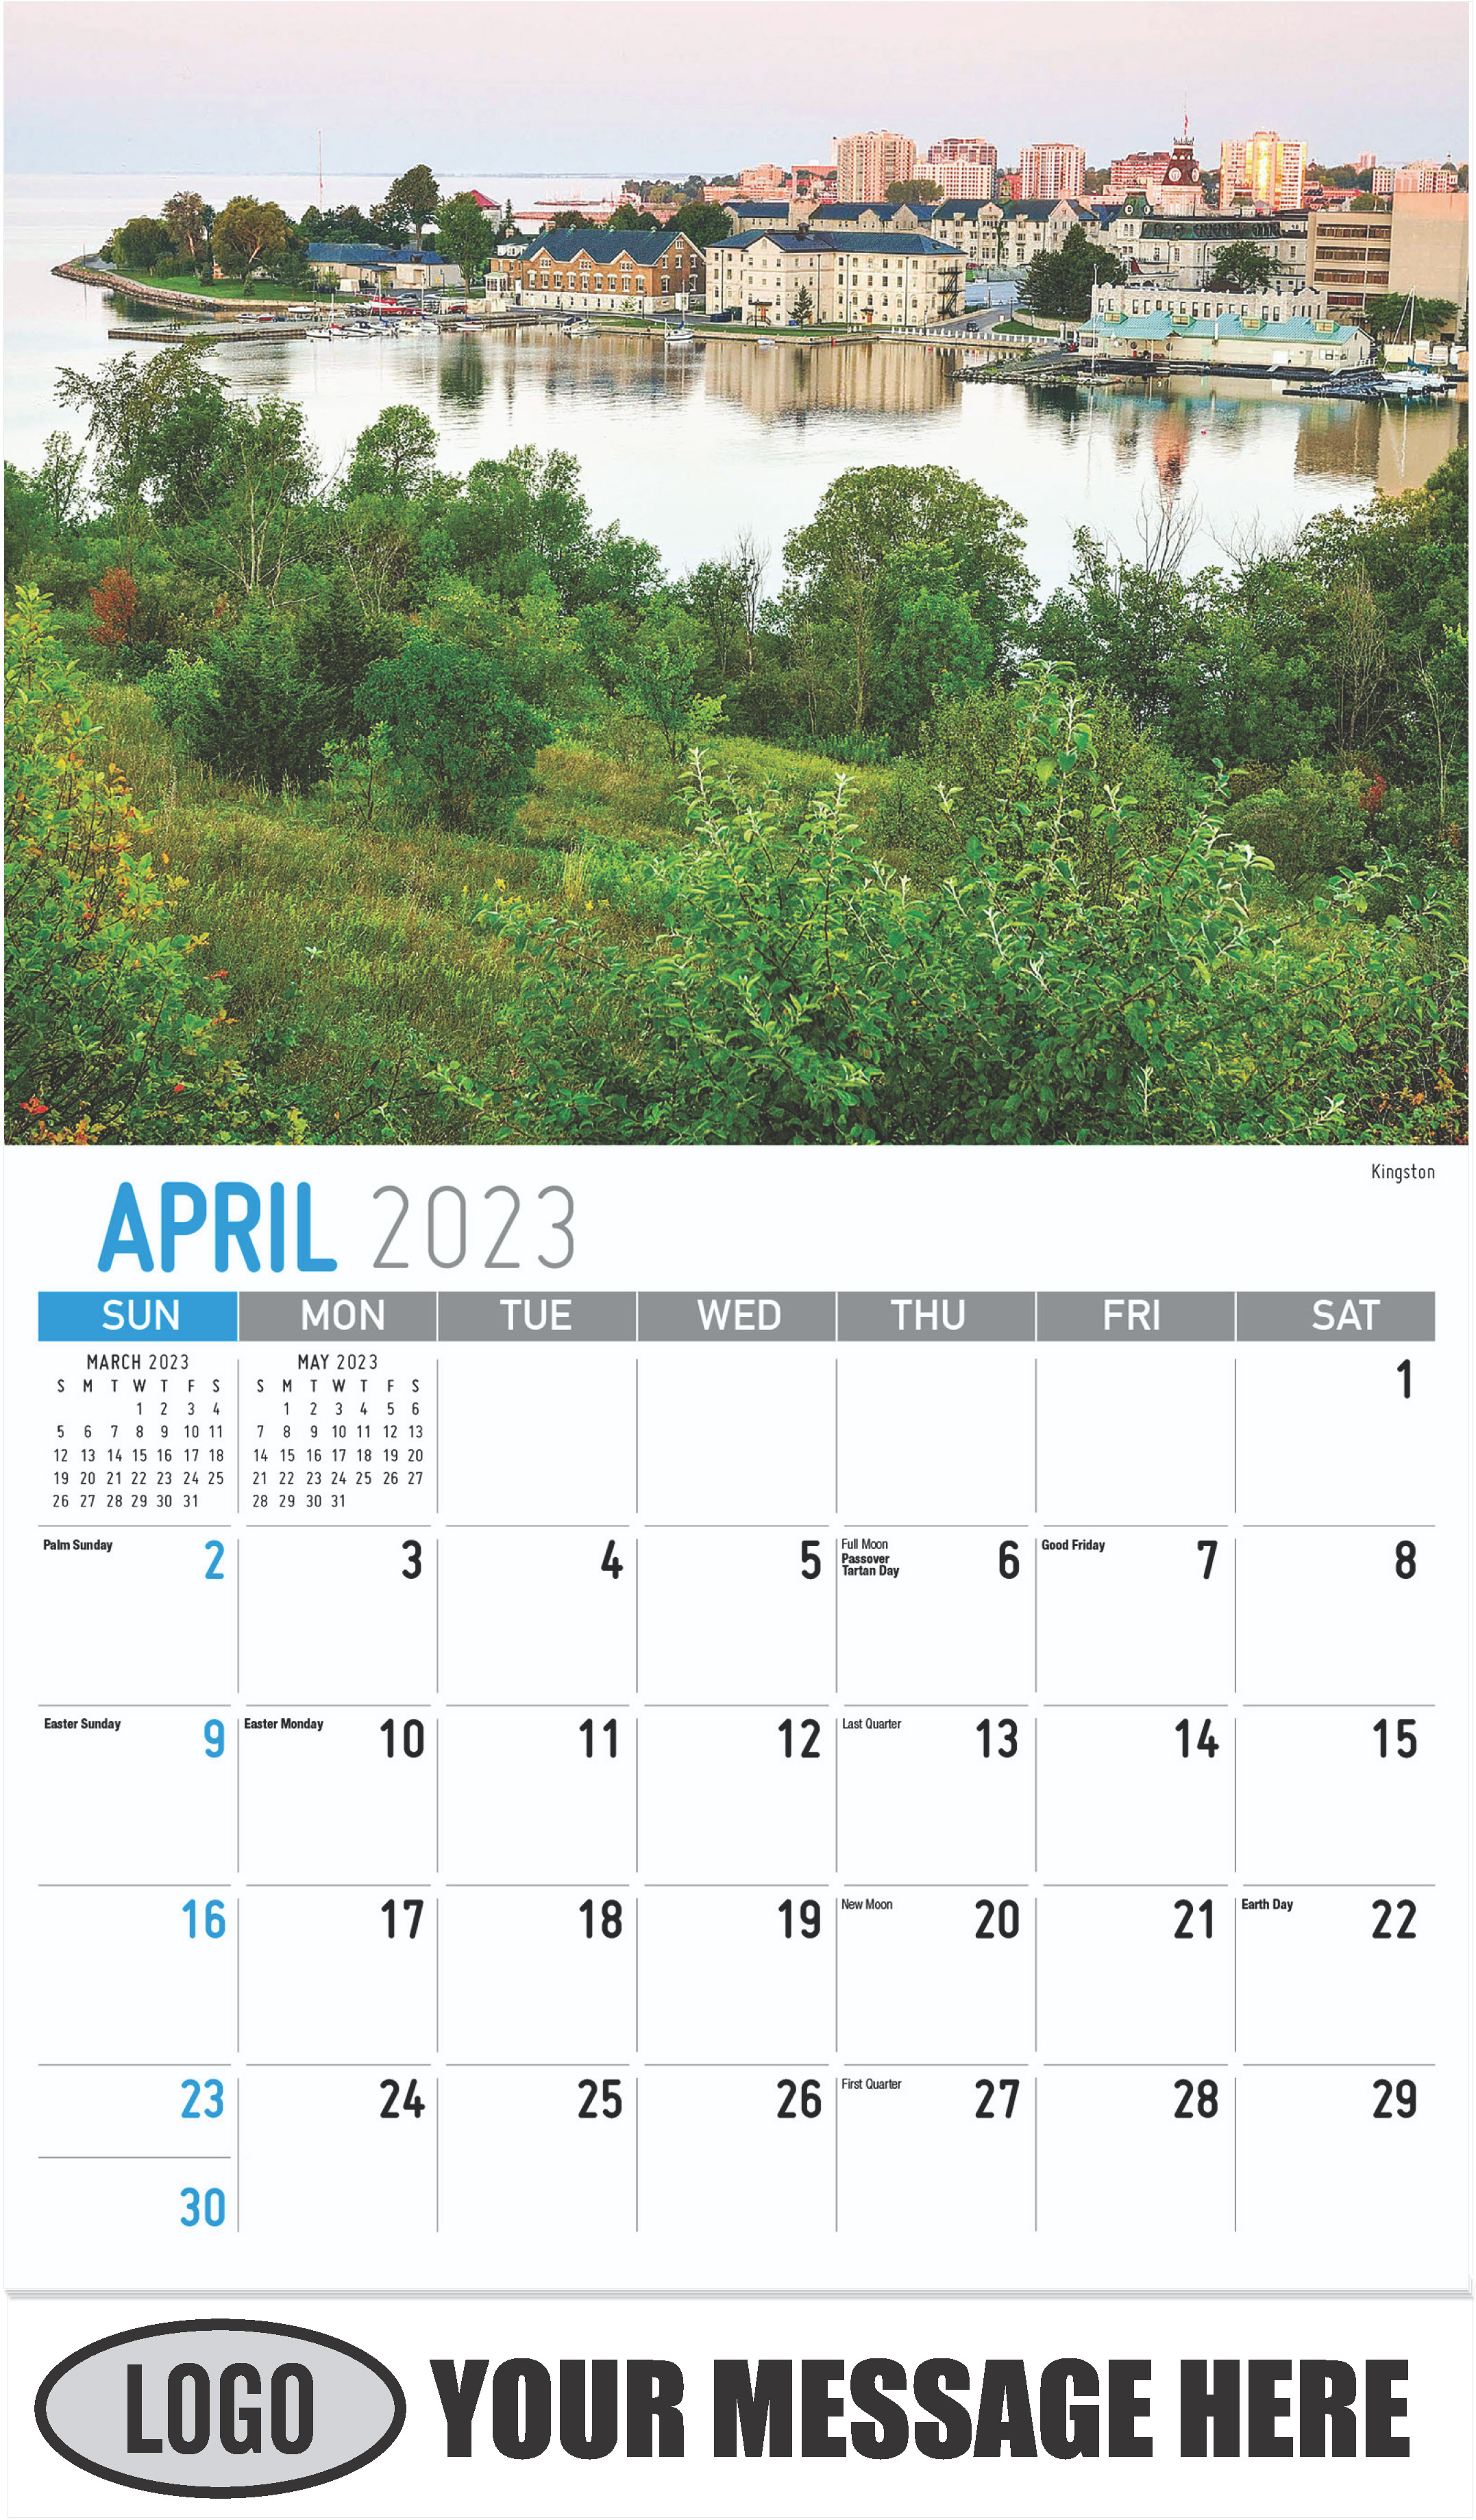 Kingston - April - Scenes of Ontario 2023 Promotional Calendar